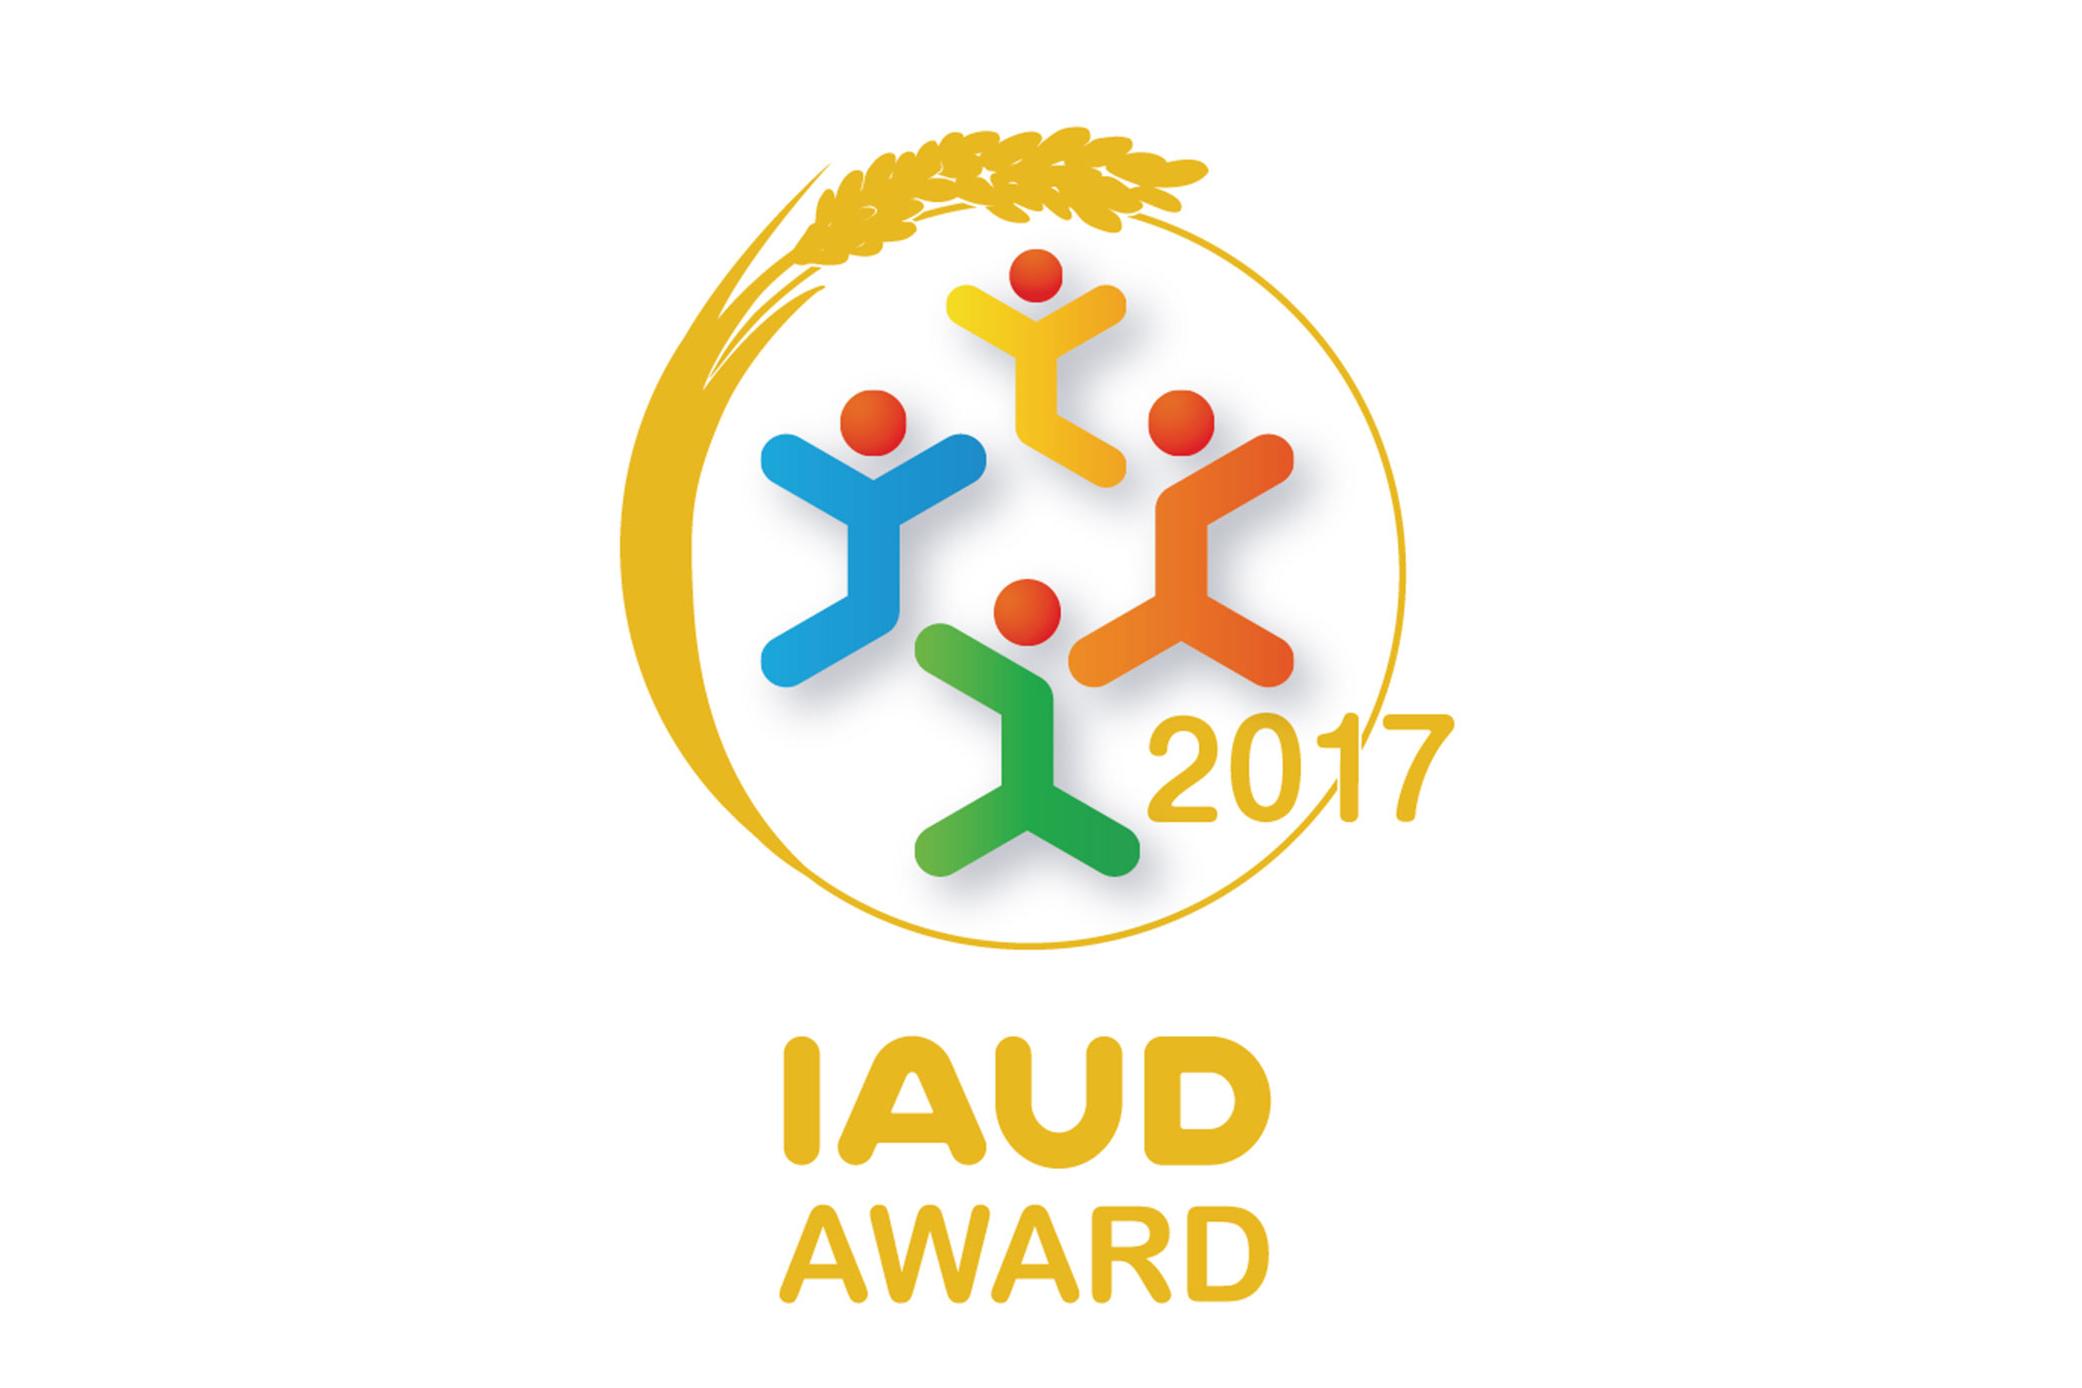 image: IAUD Award 2017 Gold Award logo